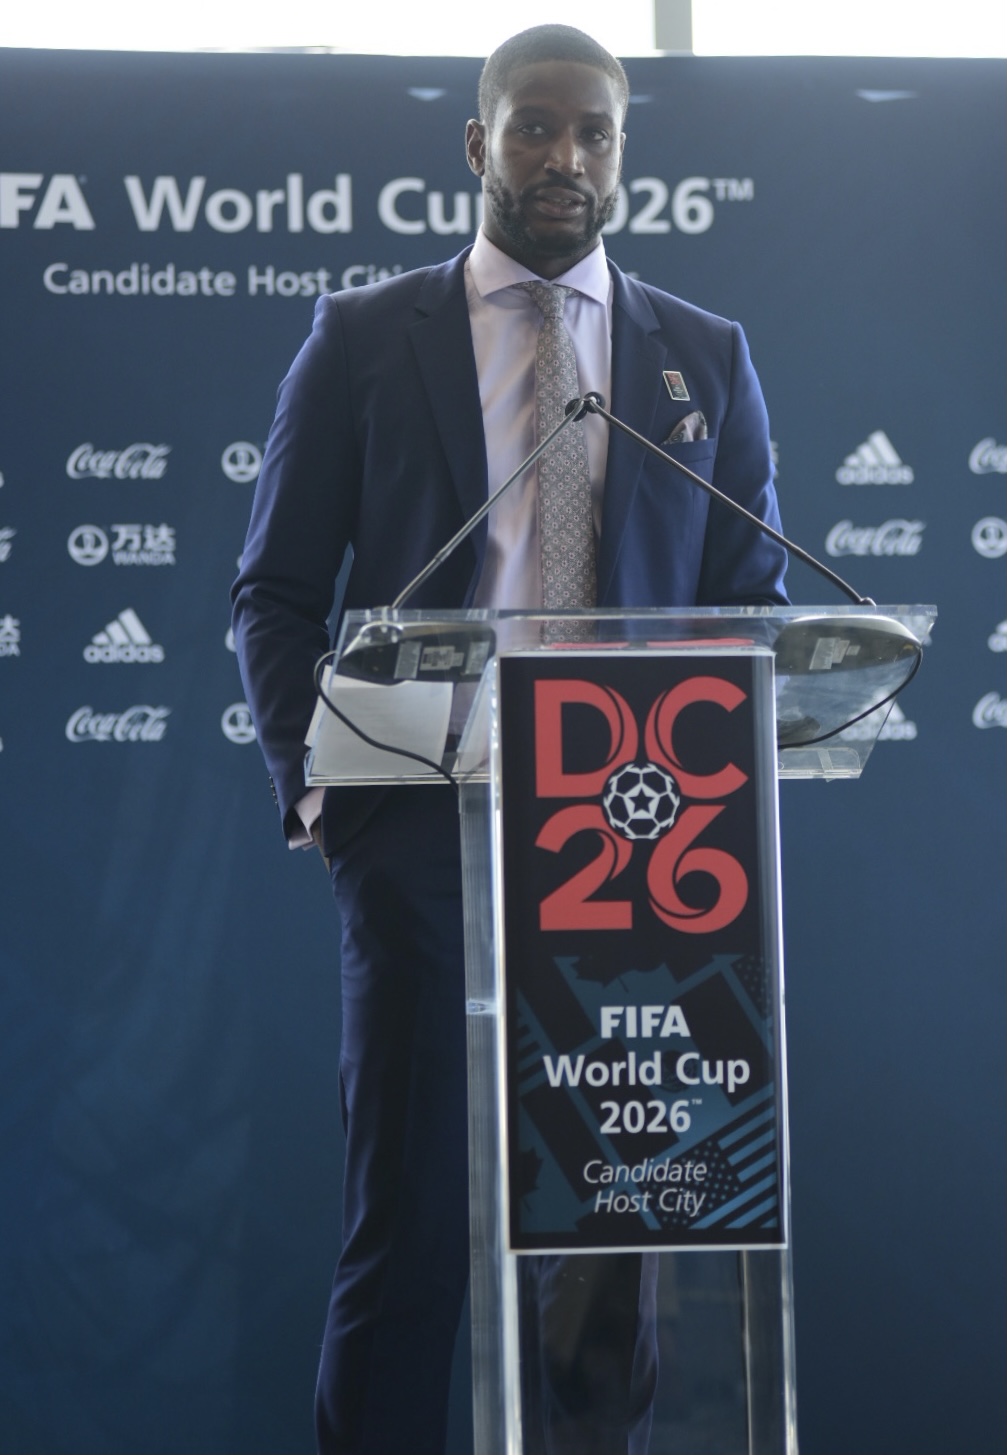 DC Makes FIFA Bid to Host World Cup Soccer Games in 2026 - Washingtonian